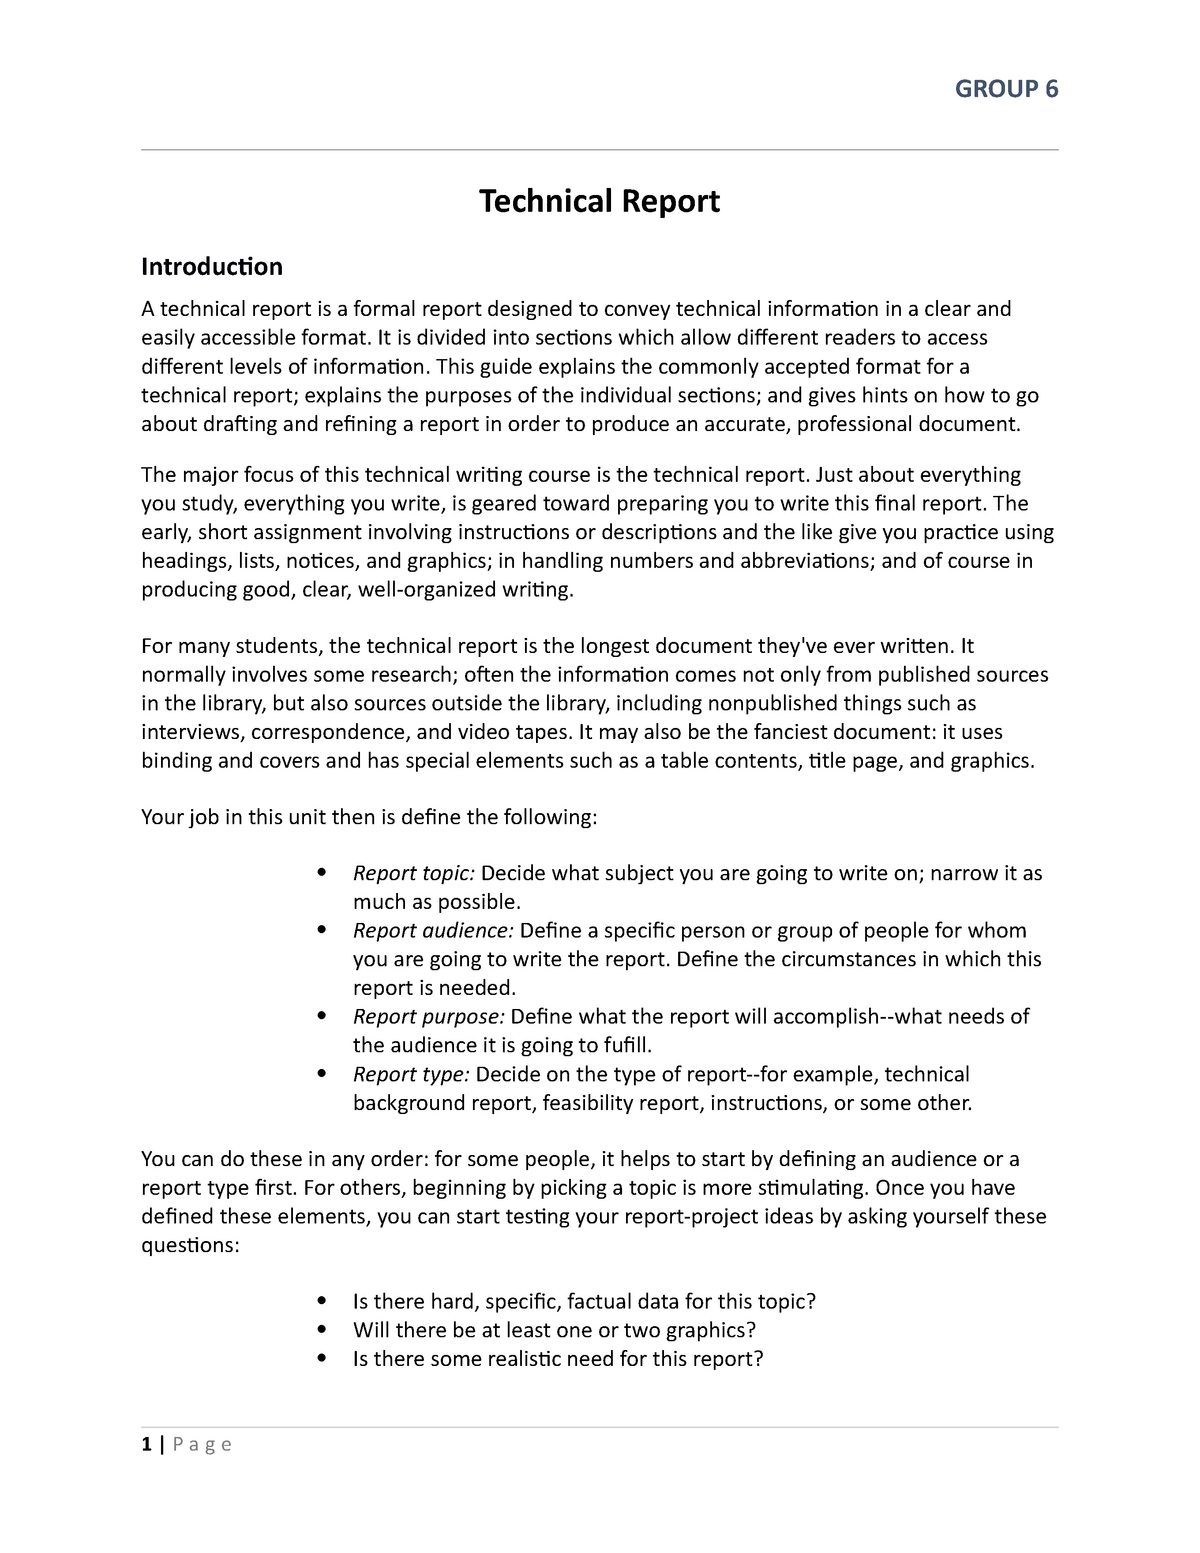 microsoft research technical report